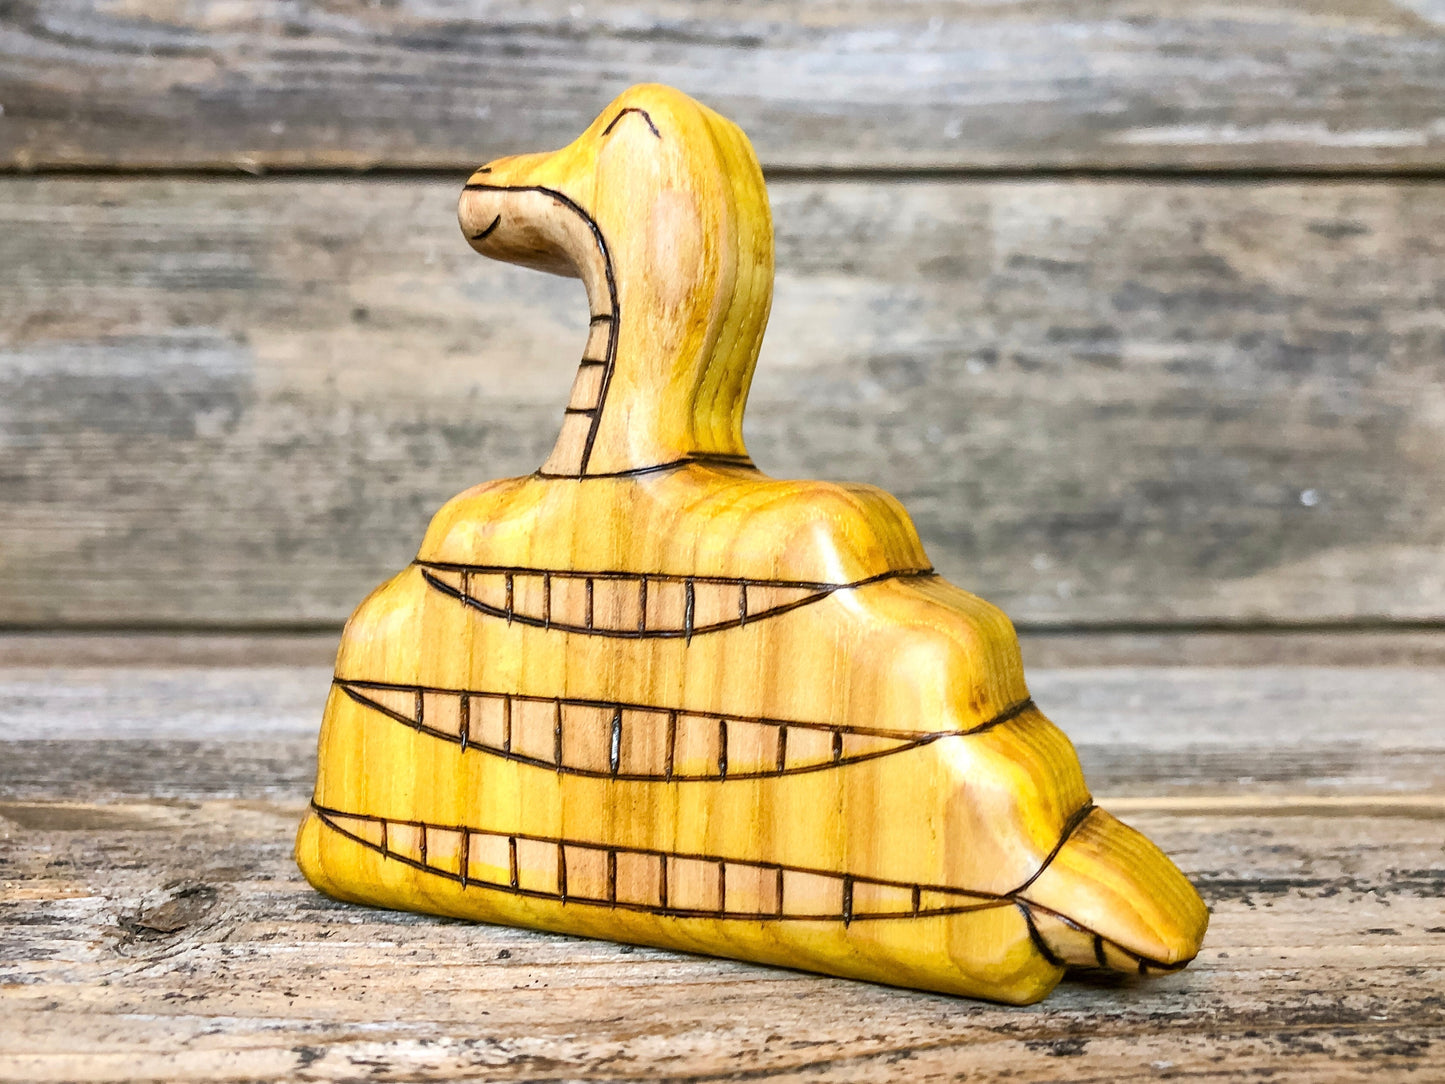 Wooden Yellow Python Snake Toy